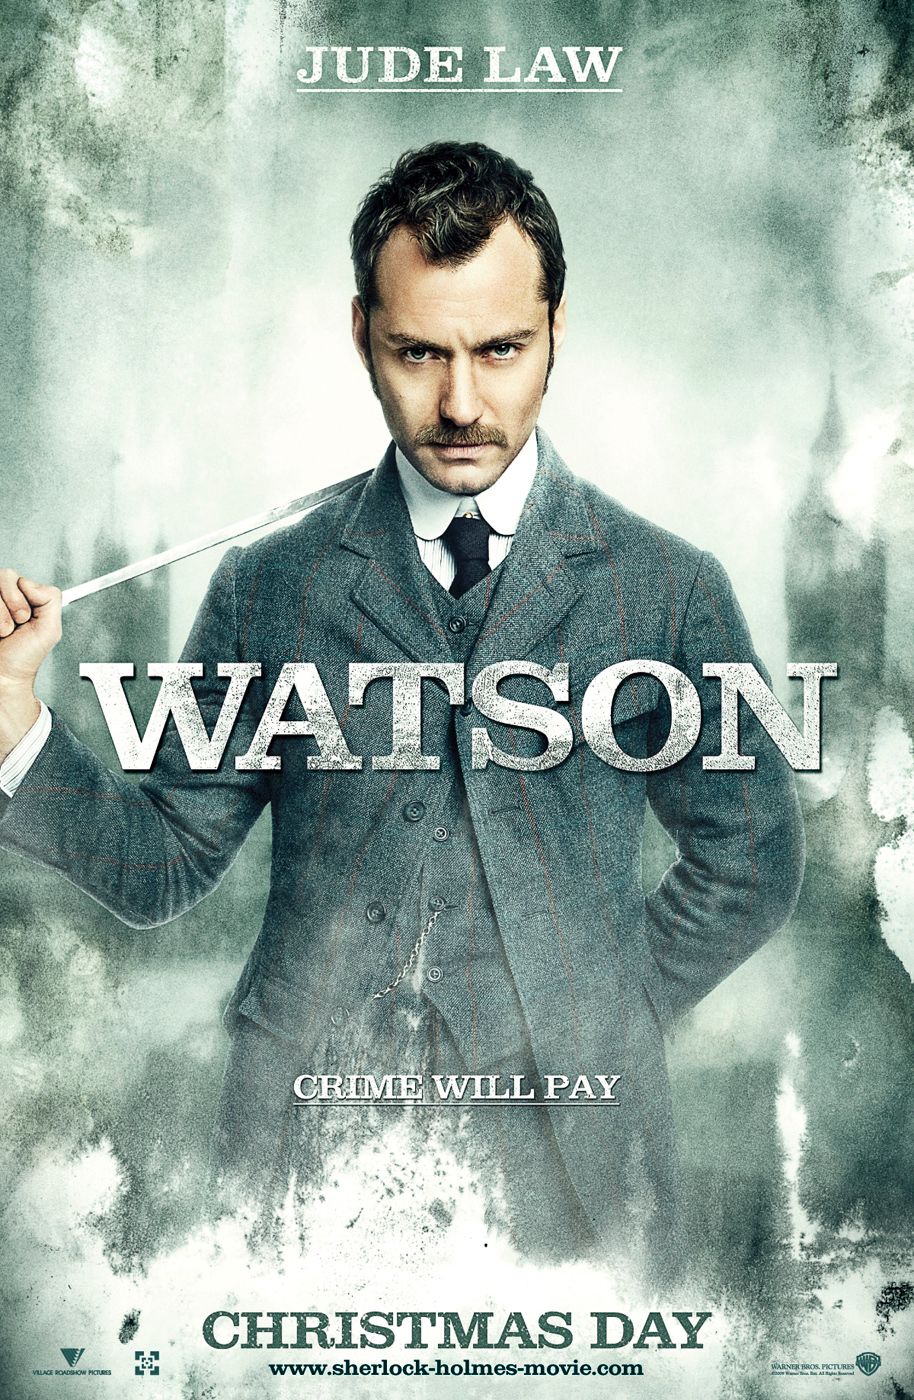 Watson Character Poster